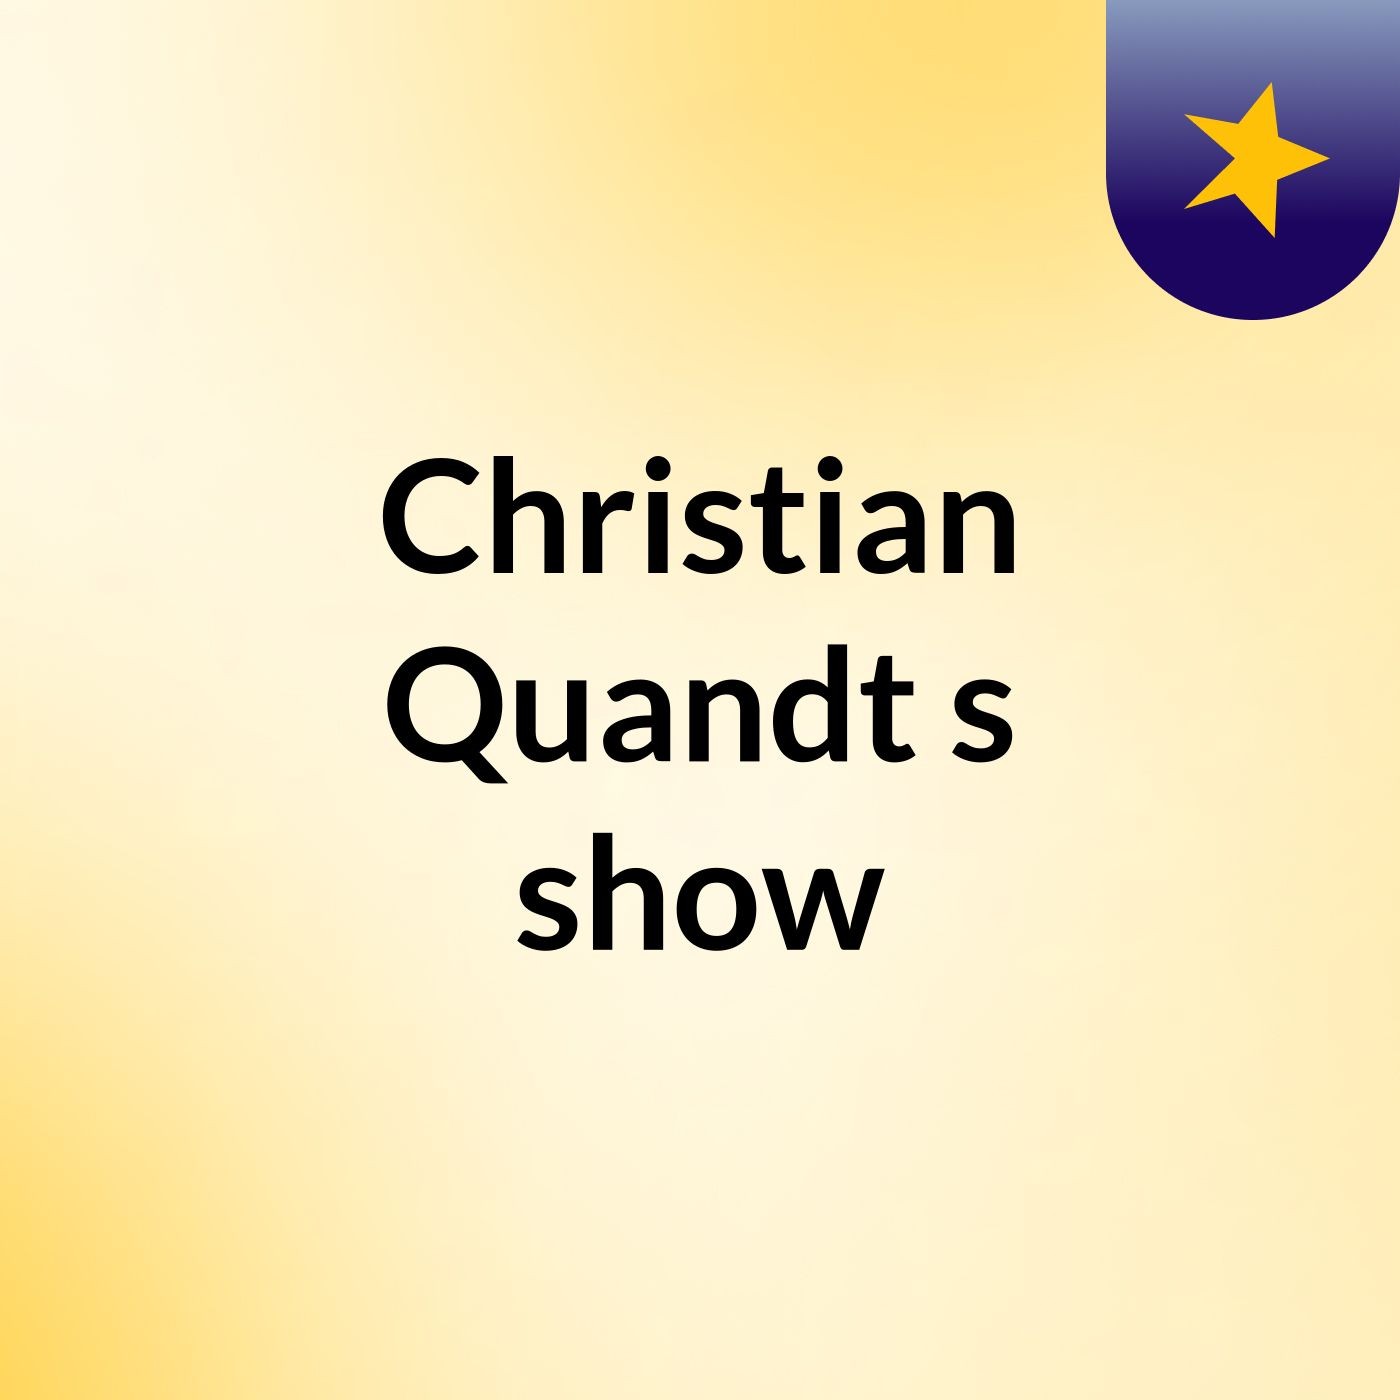 Christian Quandt's show